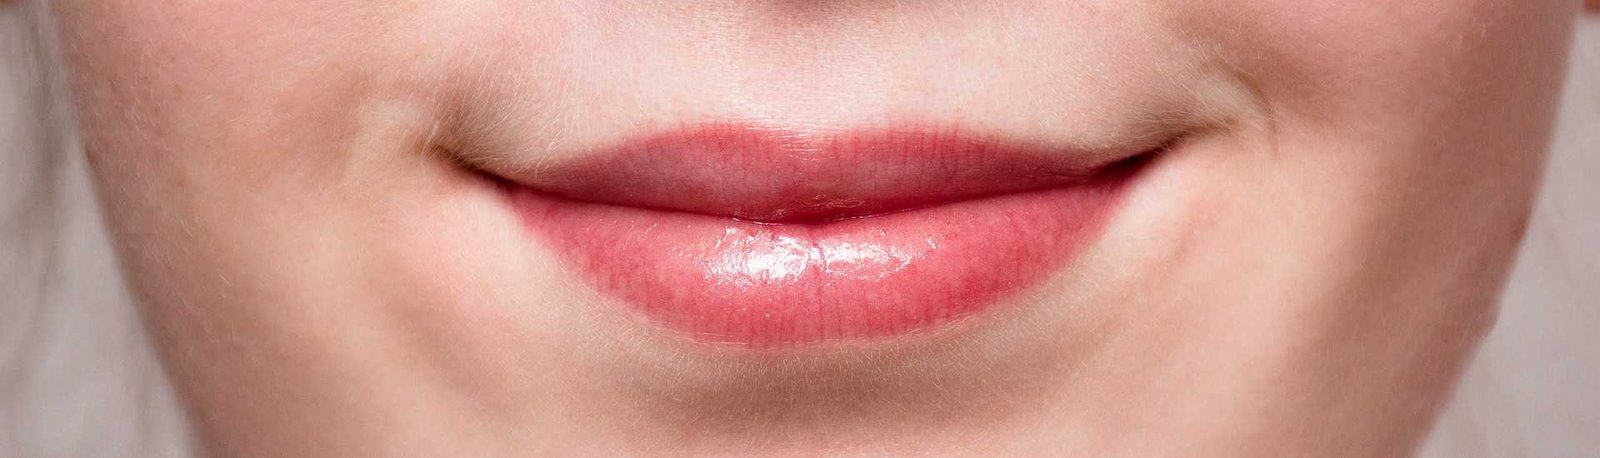 4 Dicas para Cuidar dos Lábios no Inverno